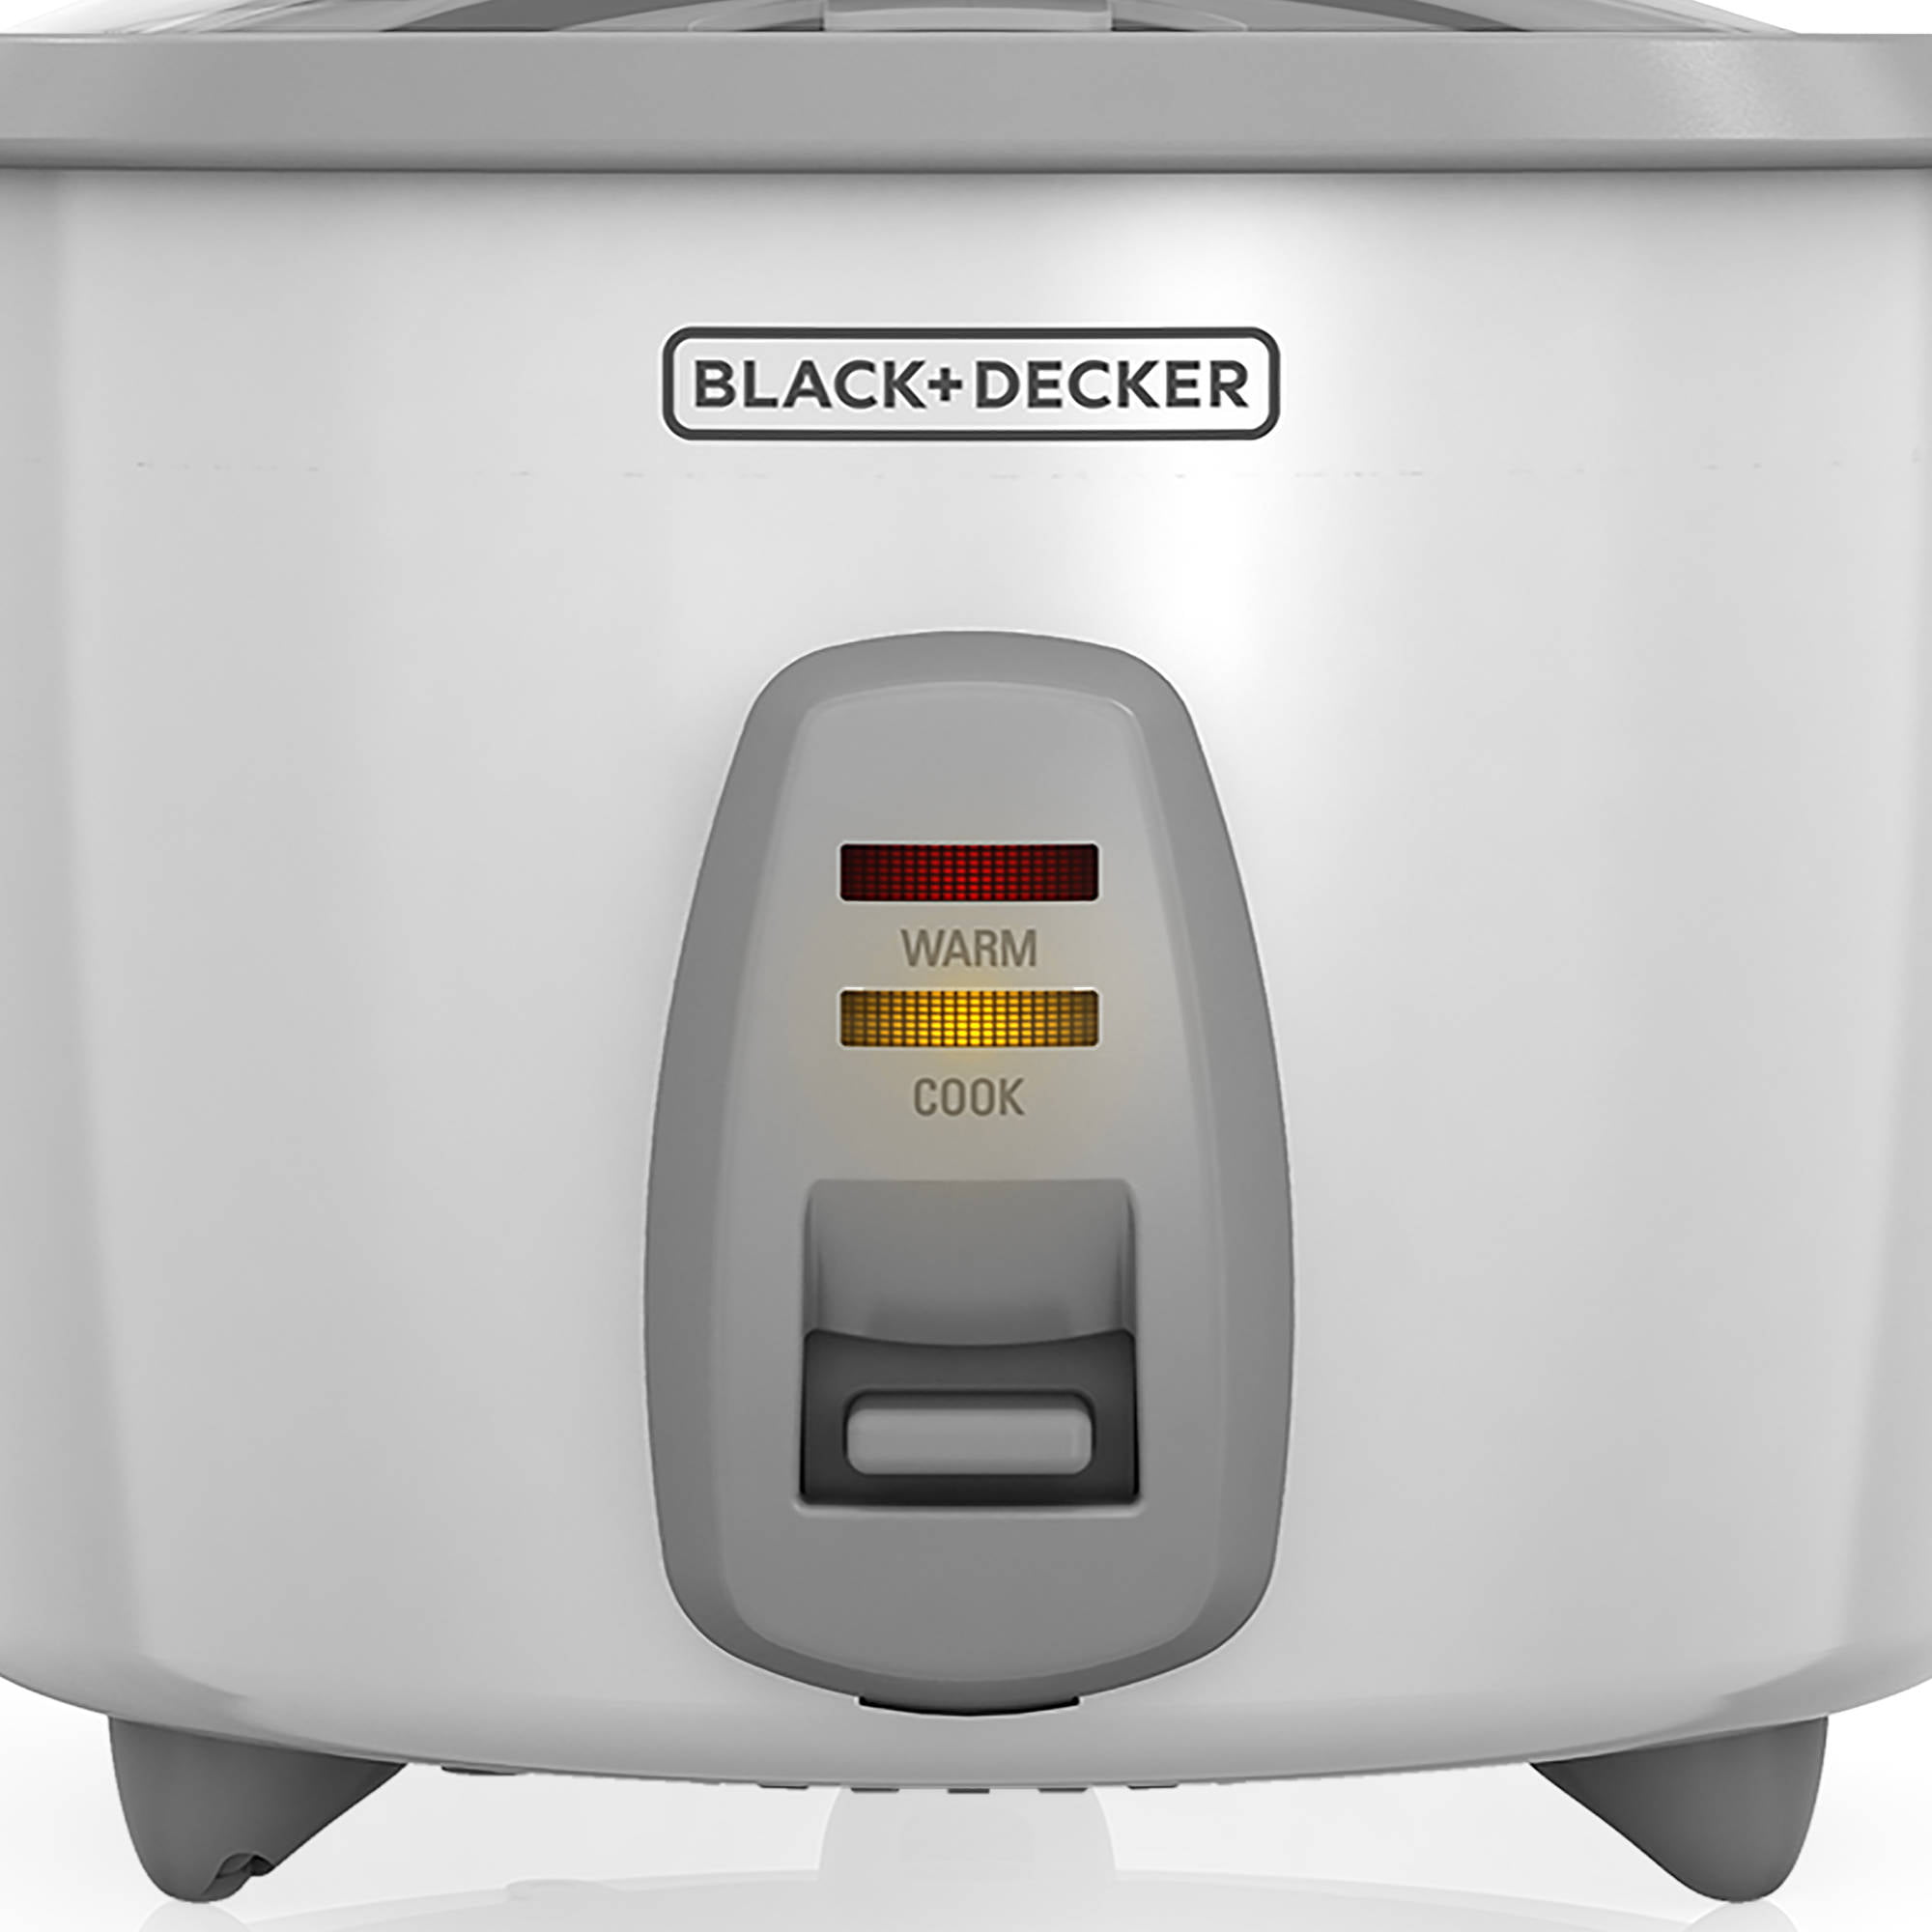 Black+Decker 3-Cup Rice Cooker $20.36